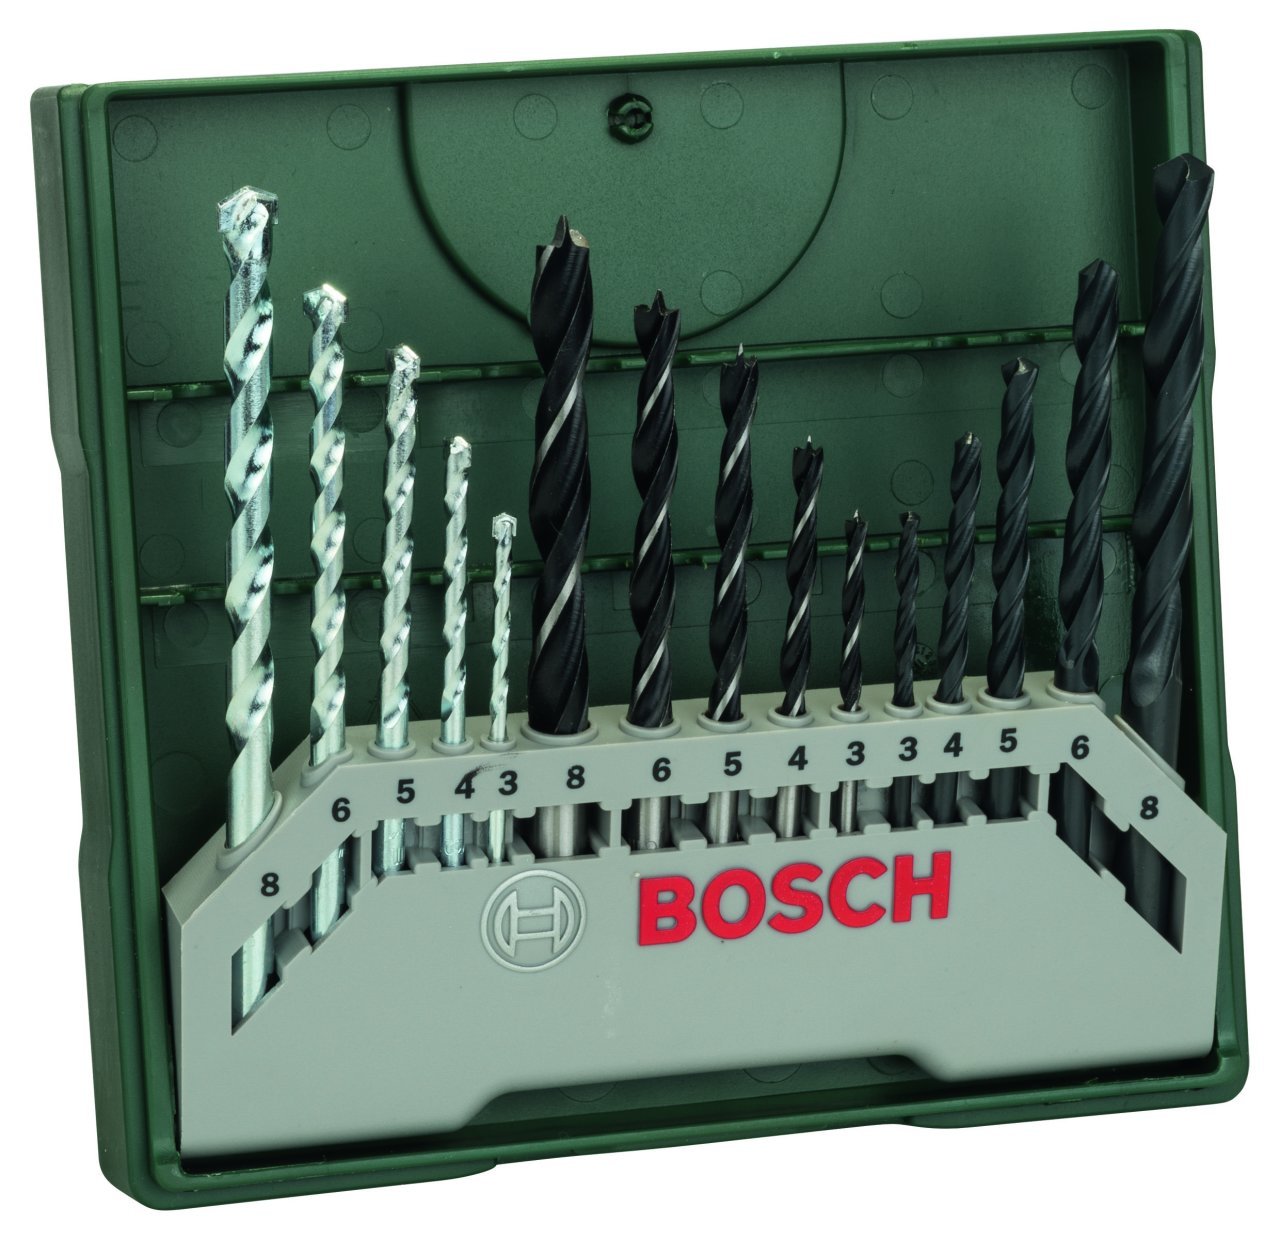 Bosch Aksesuarlar Bosch - X-Line 15 Parça Karışık Matkap Ucu Seti